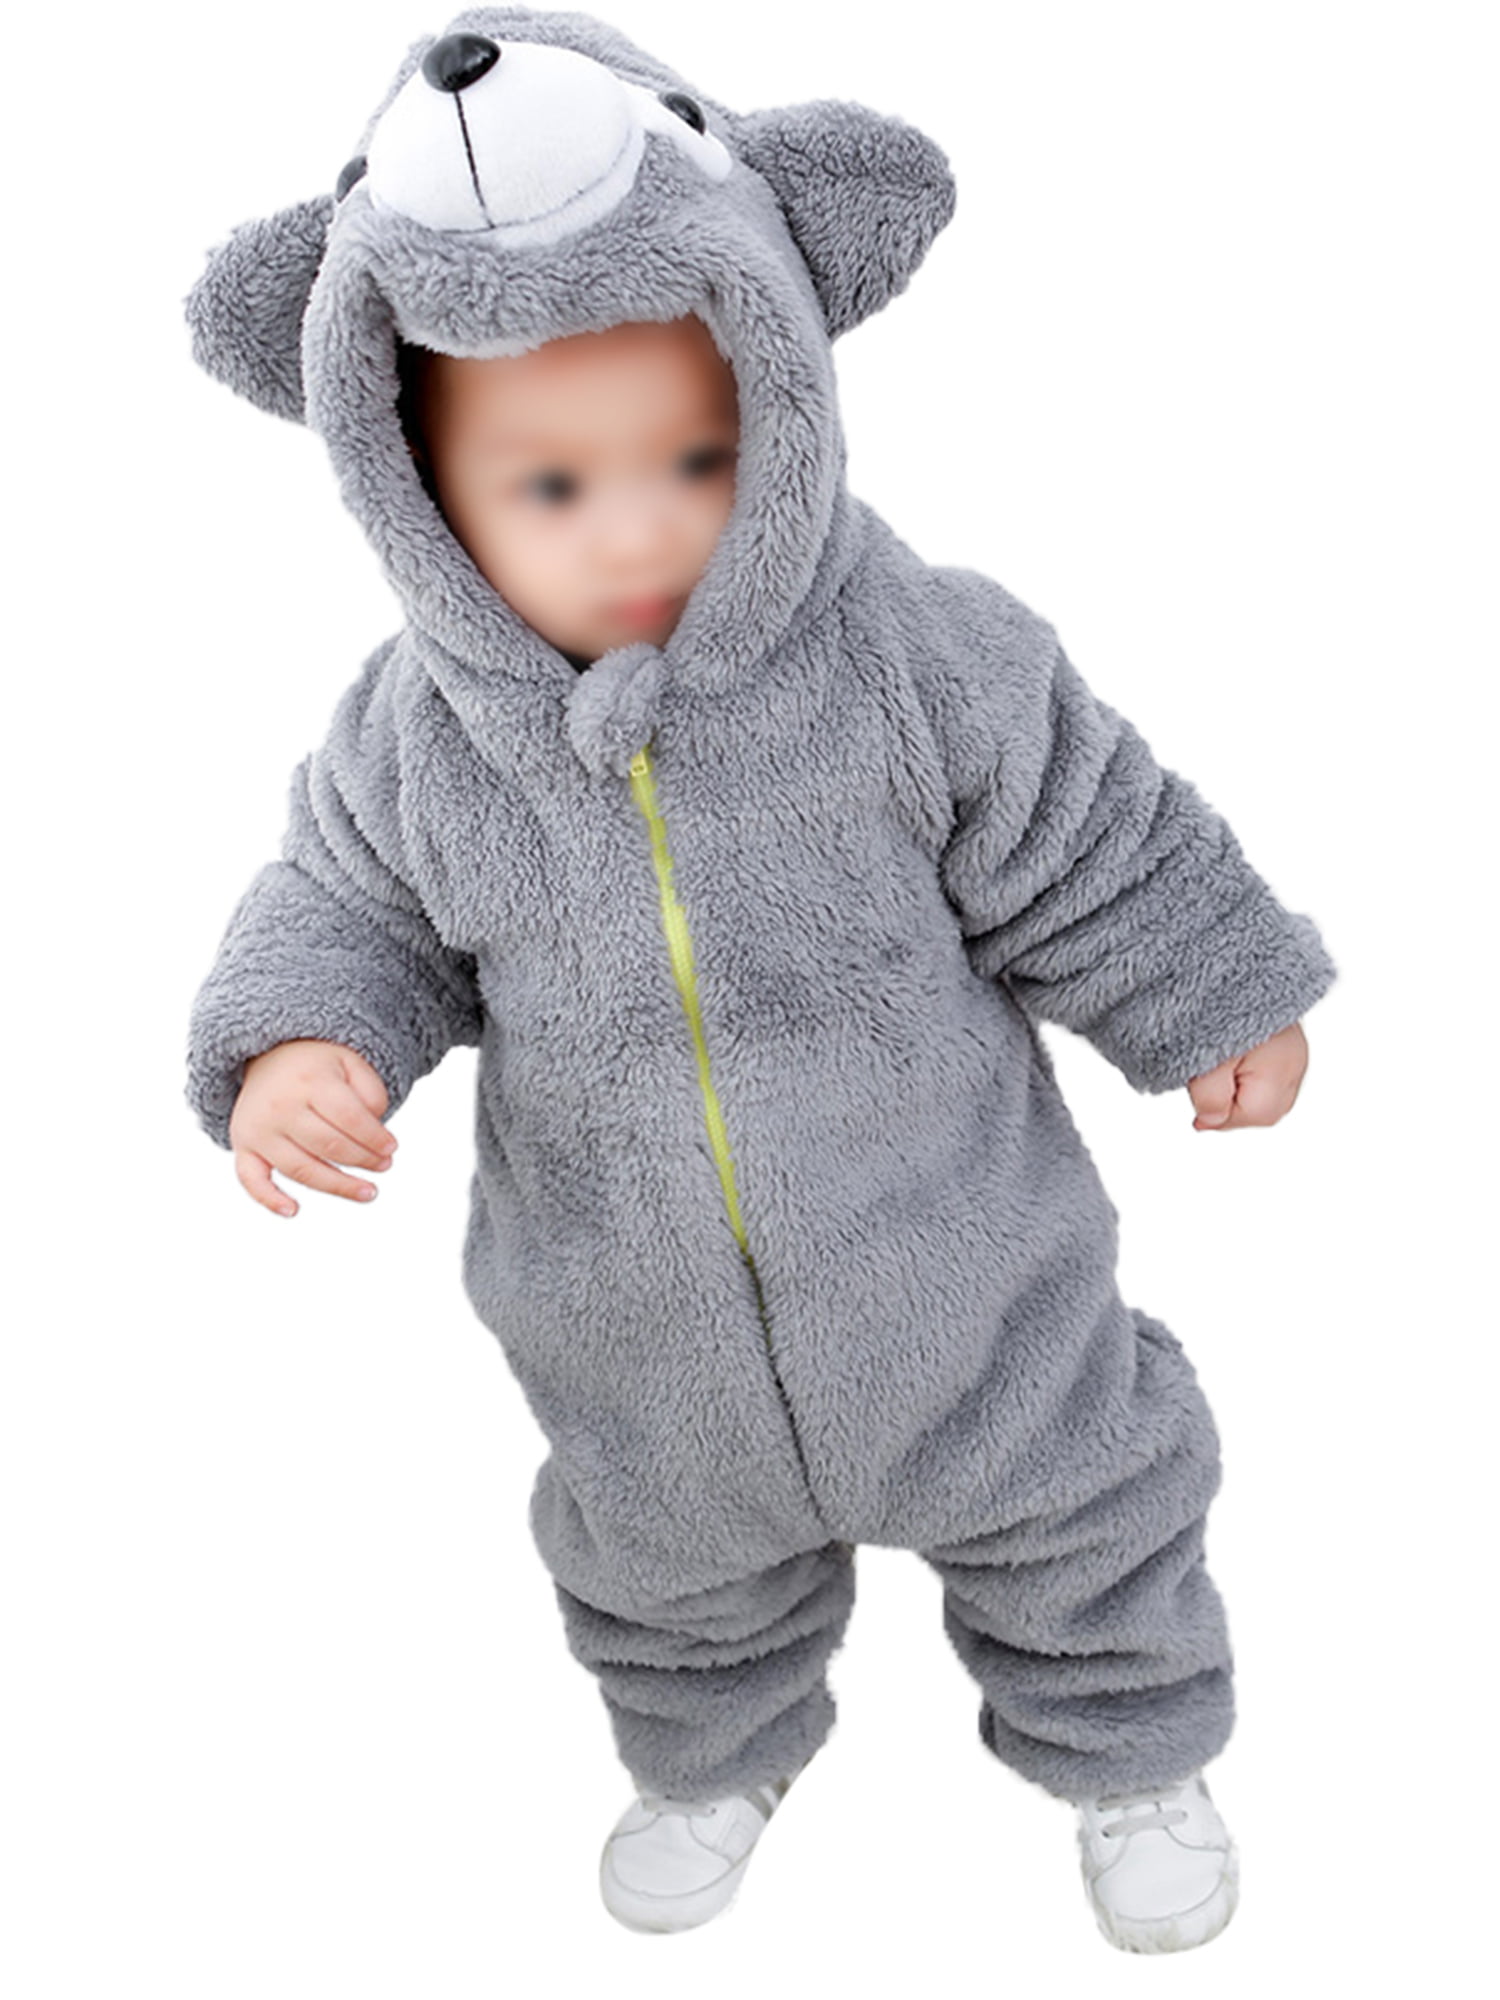 MomentDAY Spring Romper 0-2 Years Toddler Infant Newborn Baby Kids Girl Boy Long Sleeve Raccoon/Bee Print Jumpsuit Bodysuit